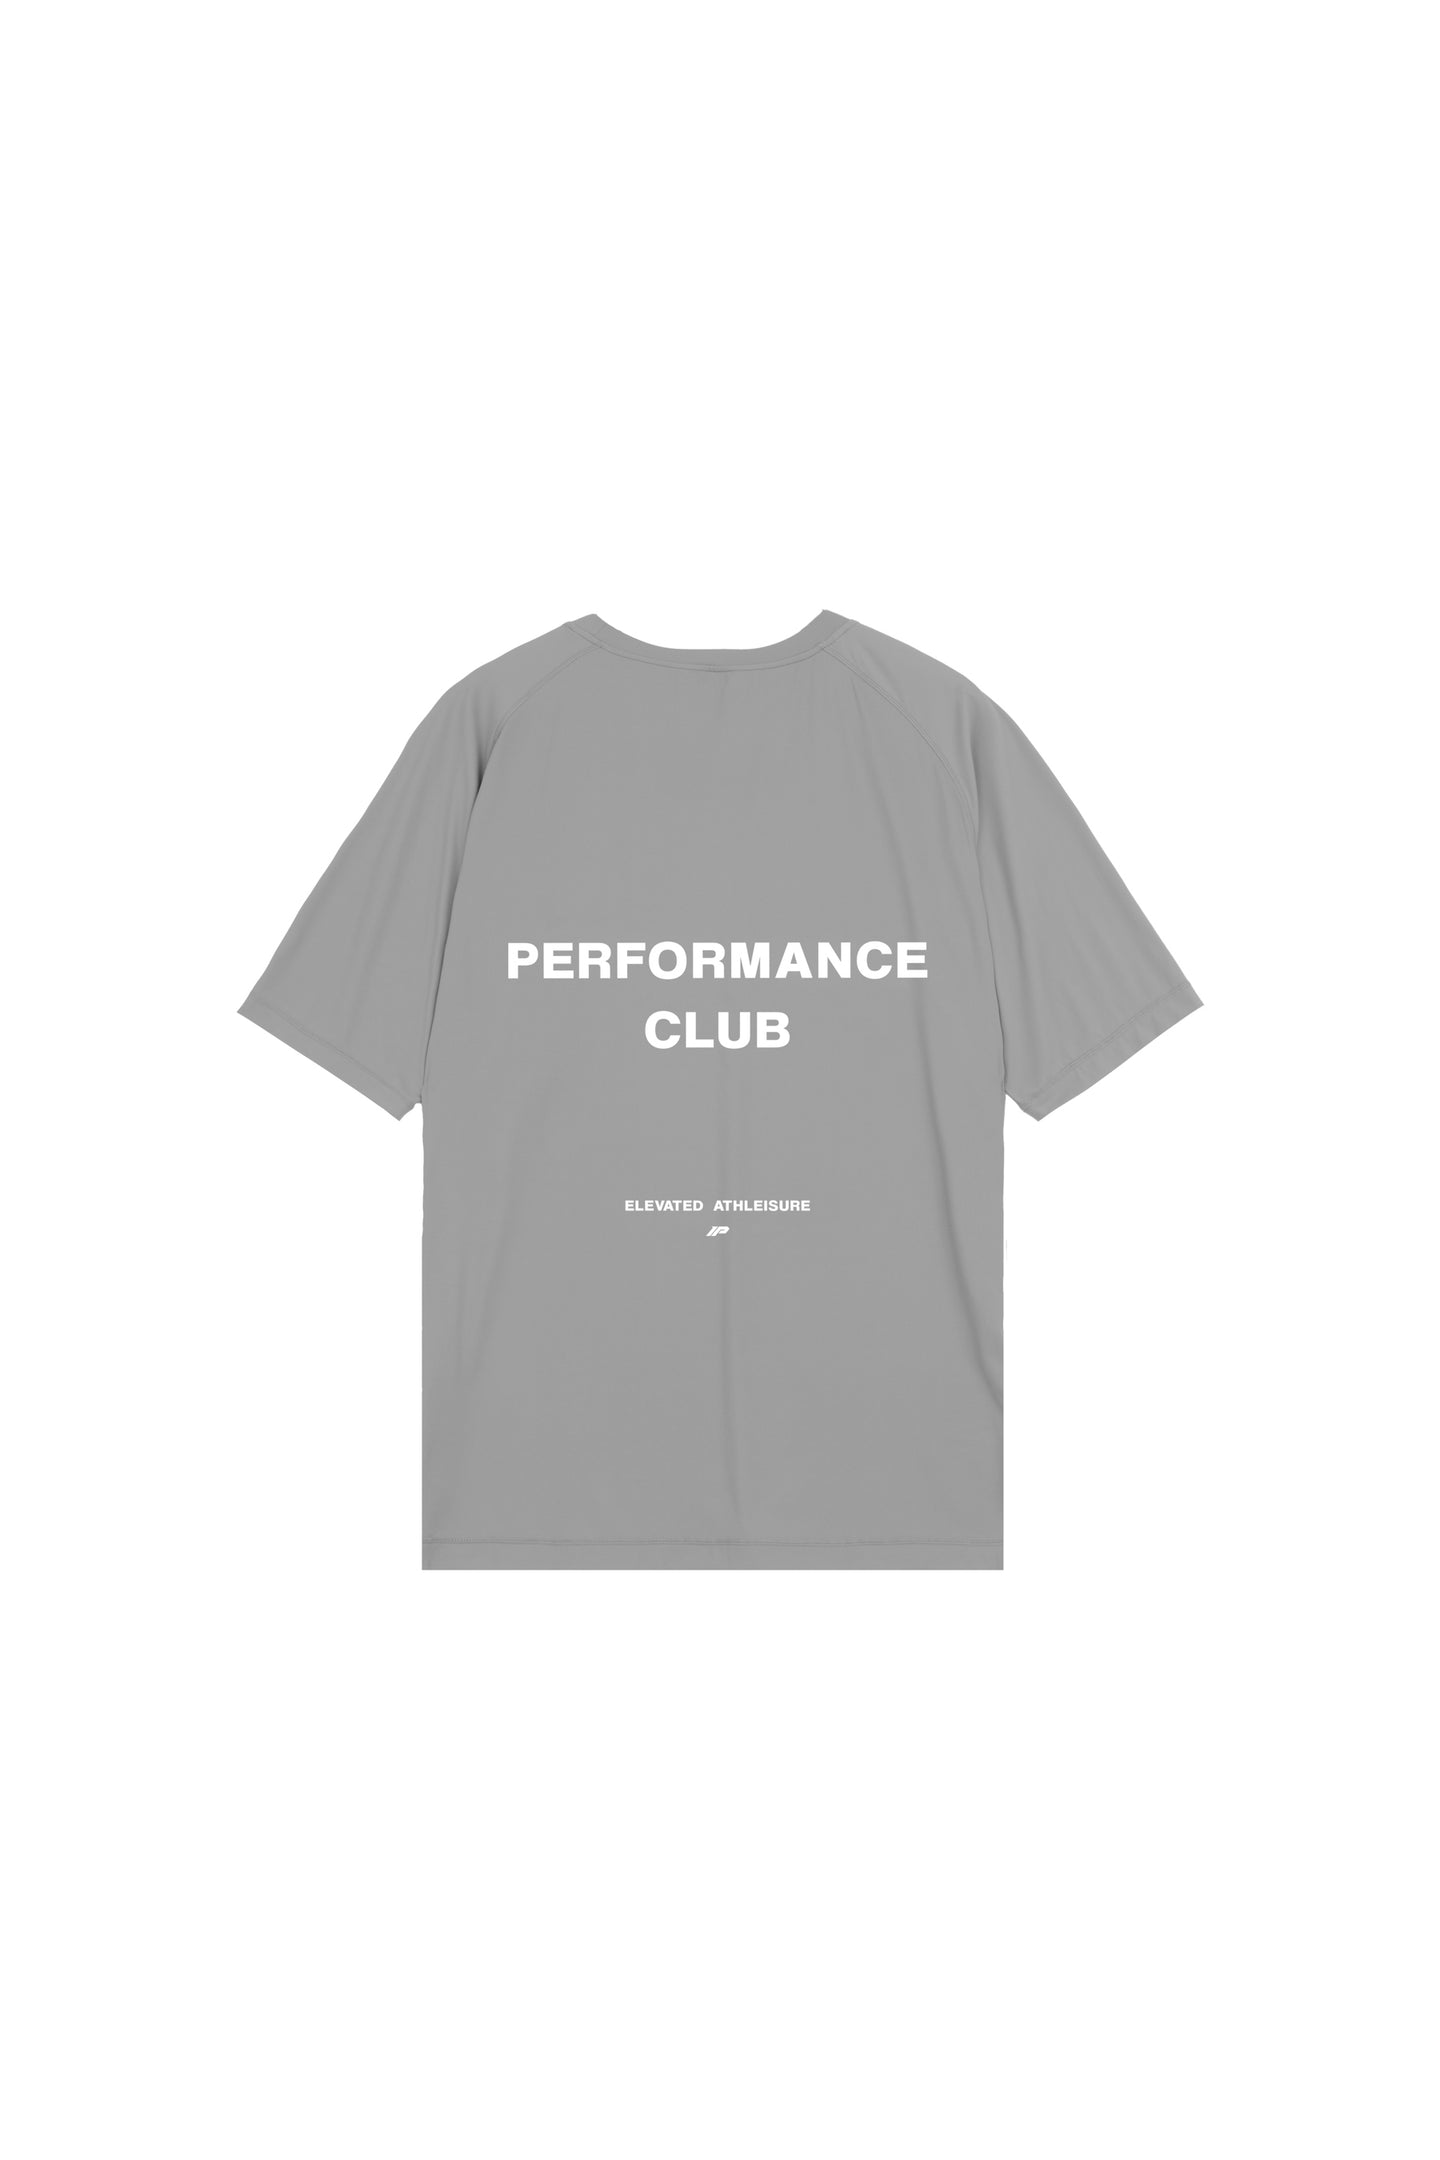 PERFORMANCE CLUB TEE - GREY